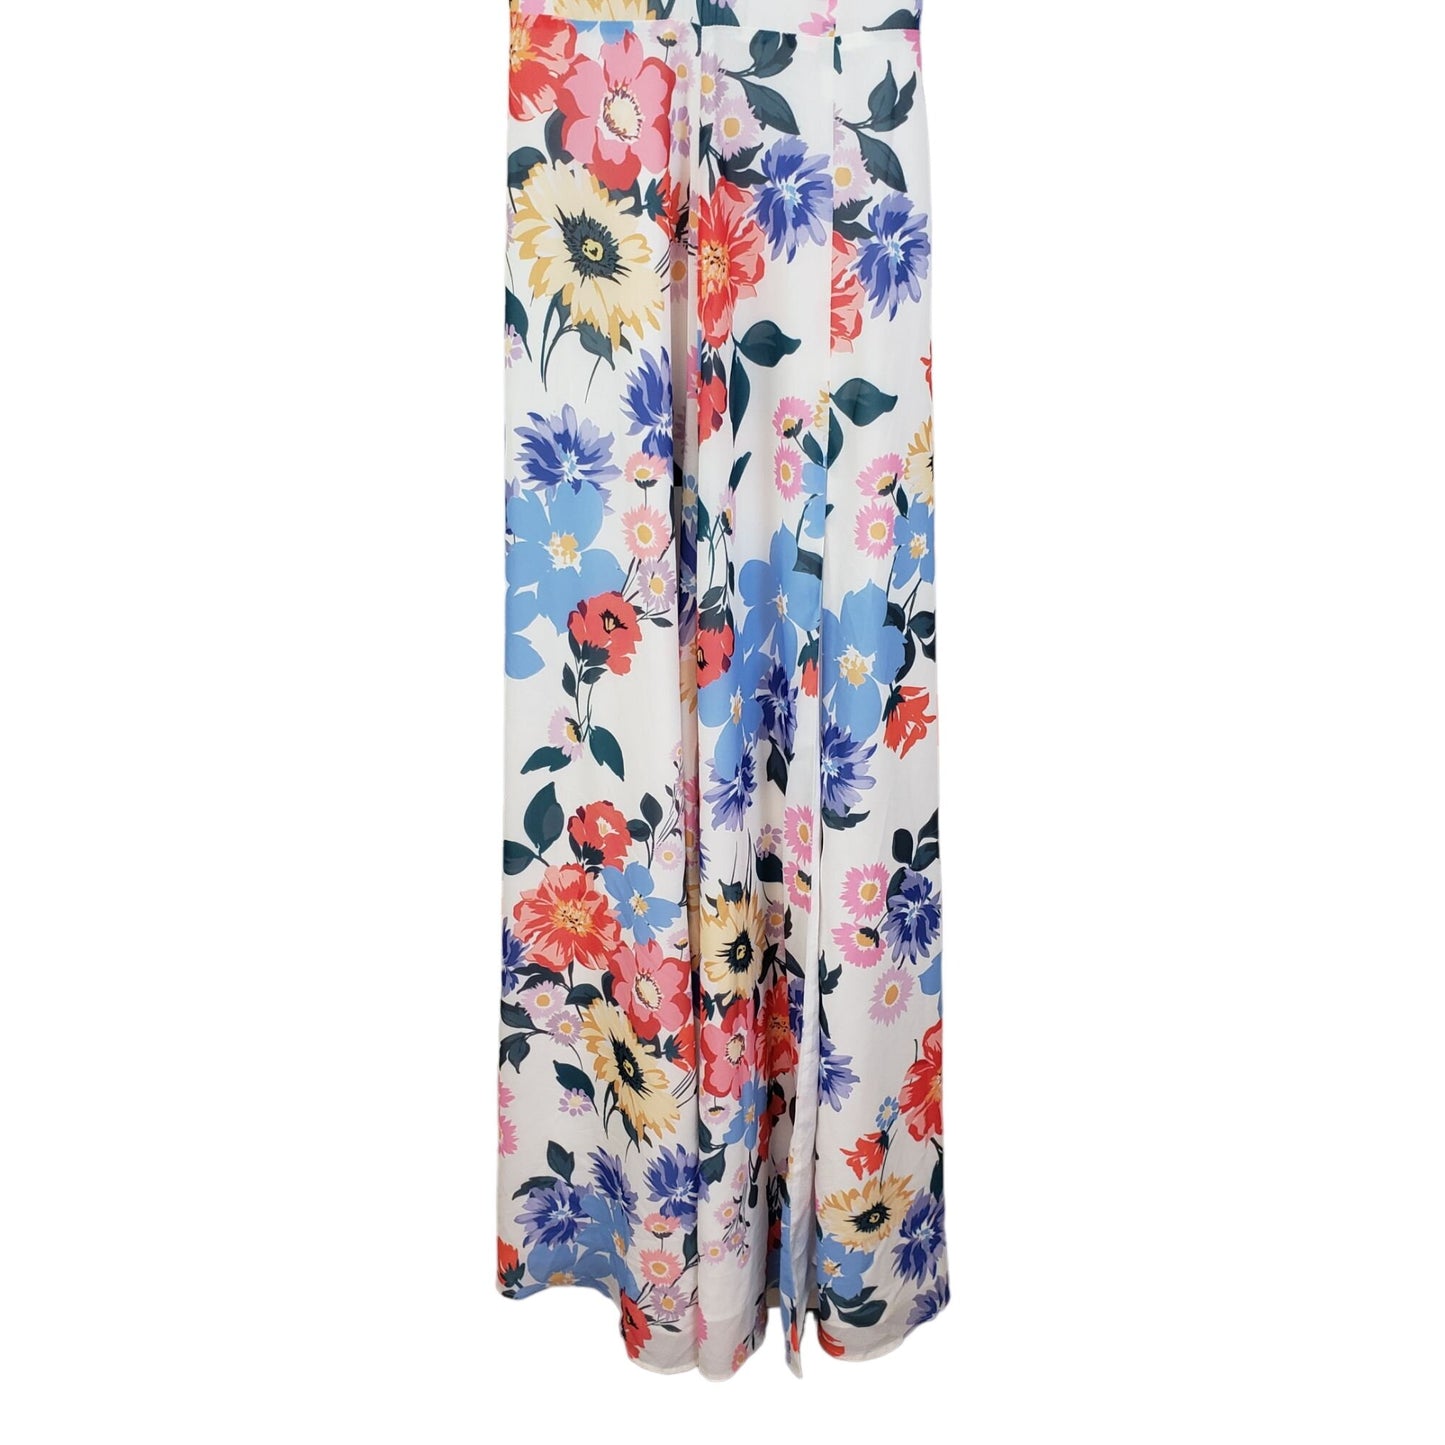 NWOT Yumi Kim Floral Maxi Side Slit Dress Size Small